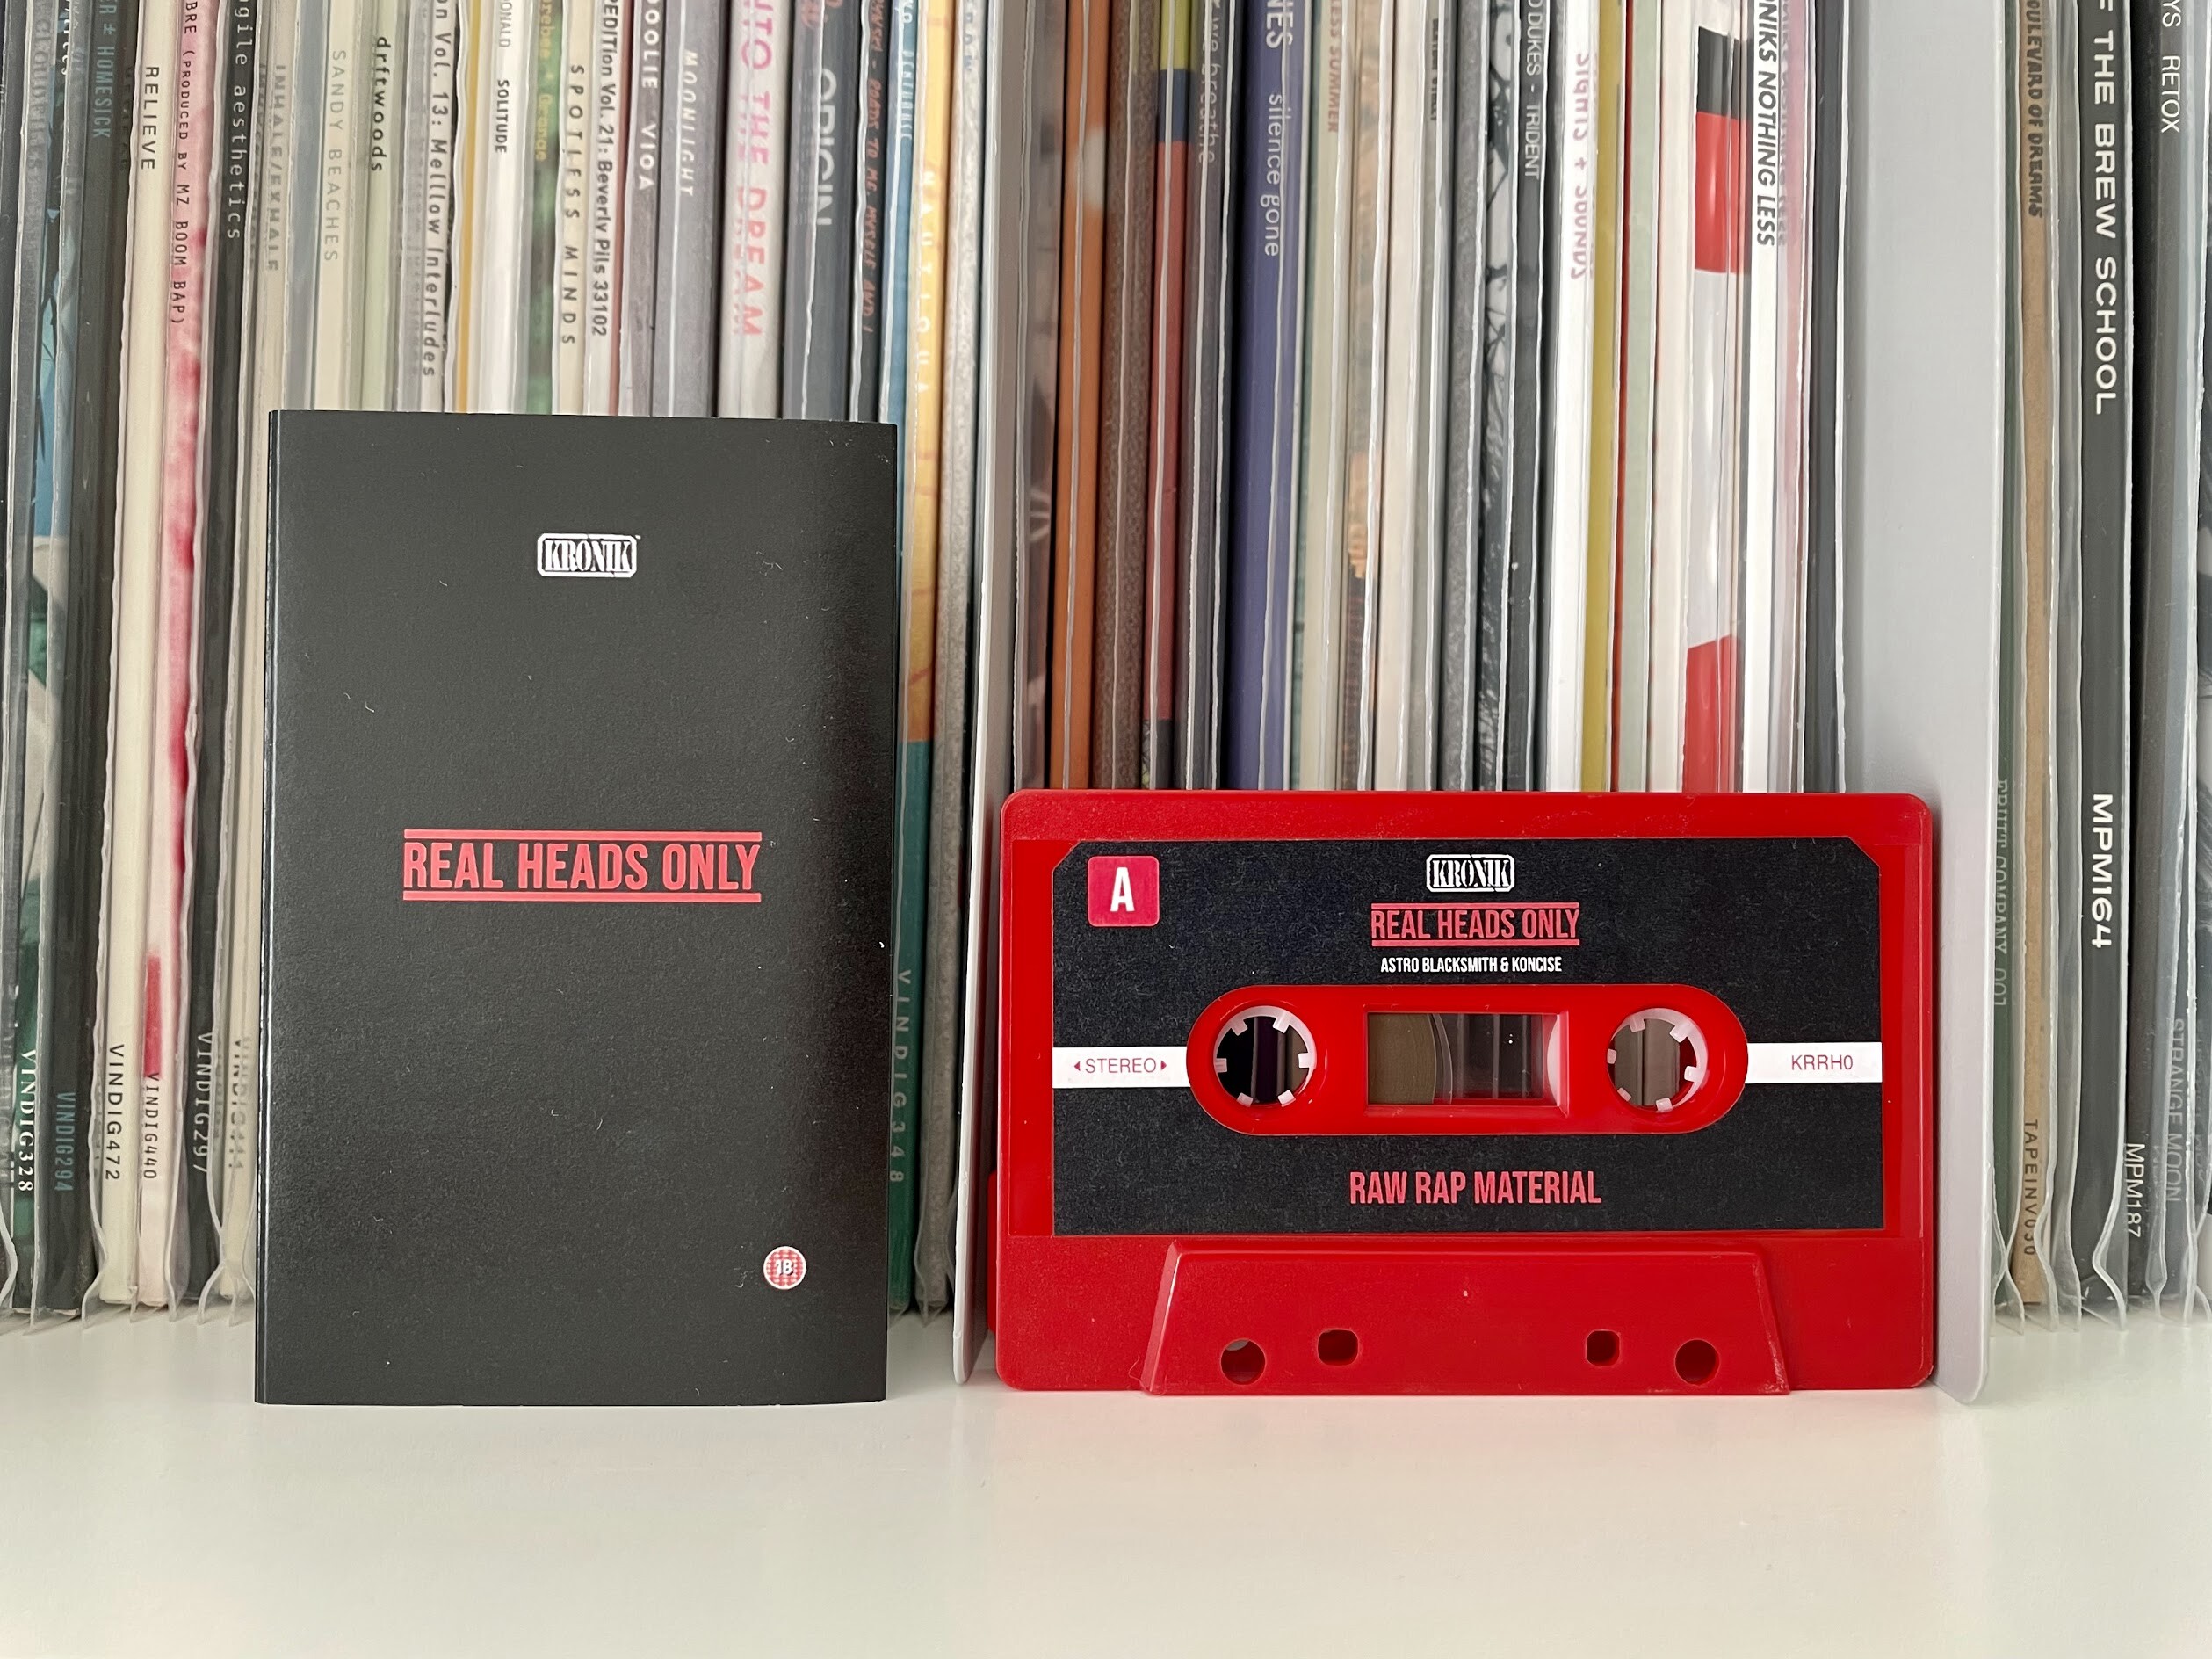 Astro Blacksmith & Koncise - Raw Rap Material